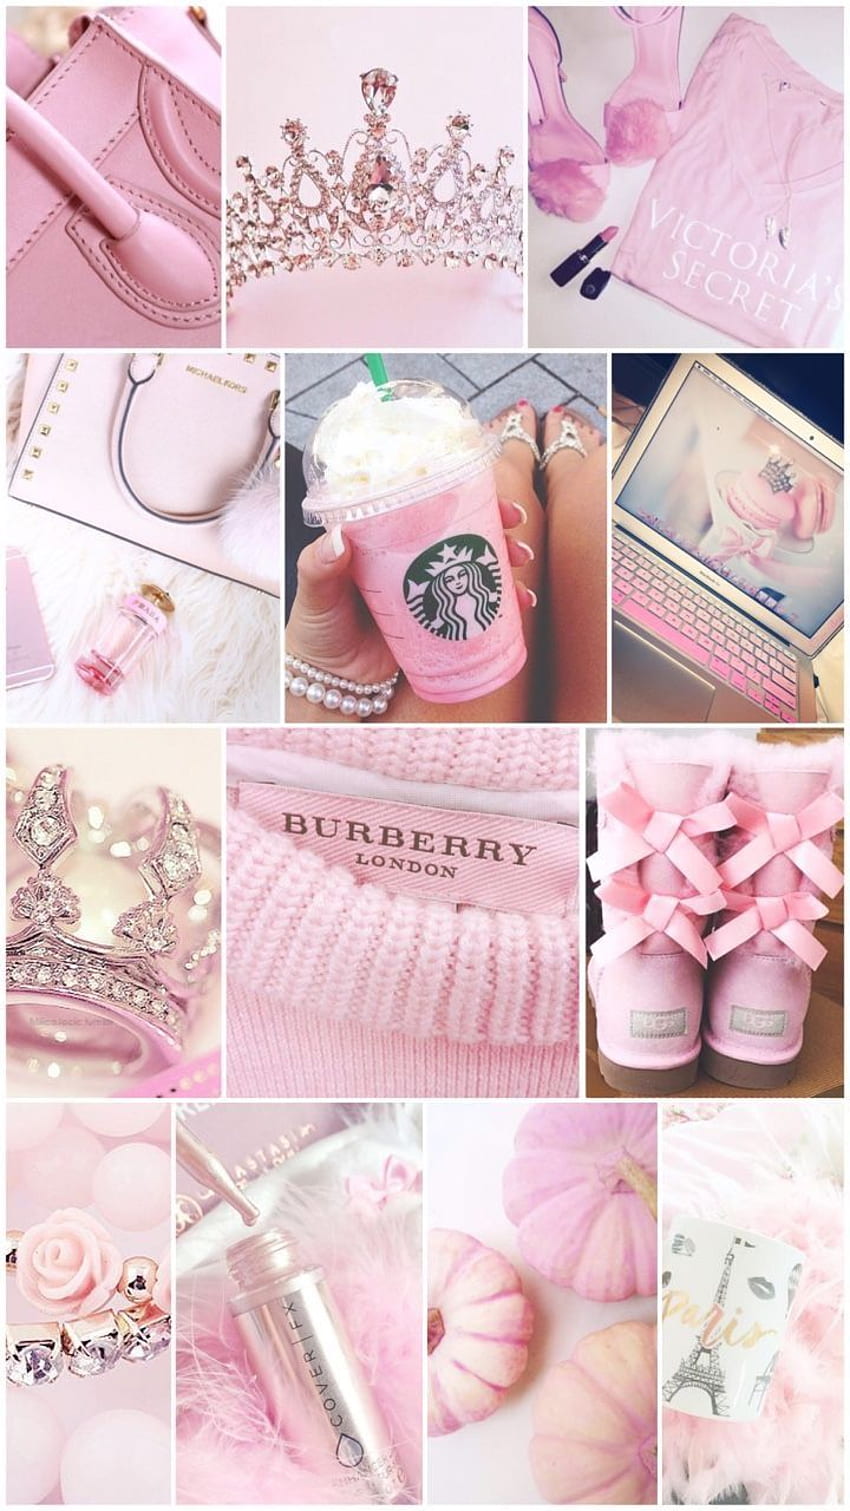 https://e0.pxfuel.com/wallpapers/31/331/desktop-wallpaper-modern-pink-princess-aesthetic-cute-girly-collages.jpg